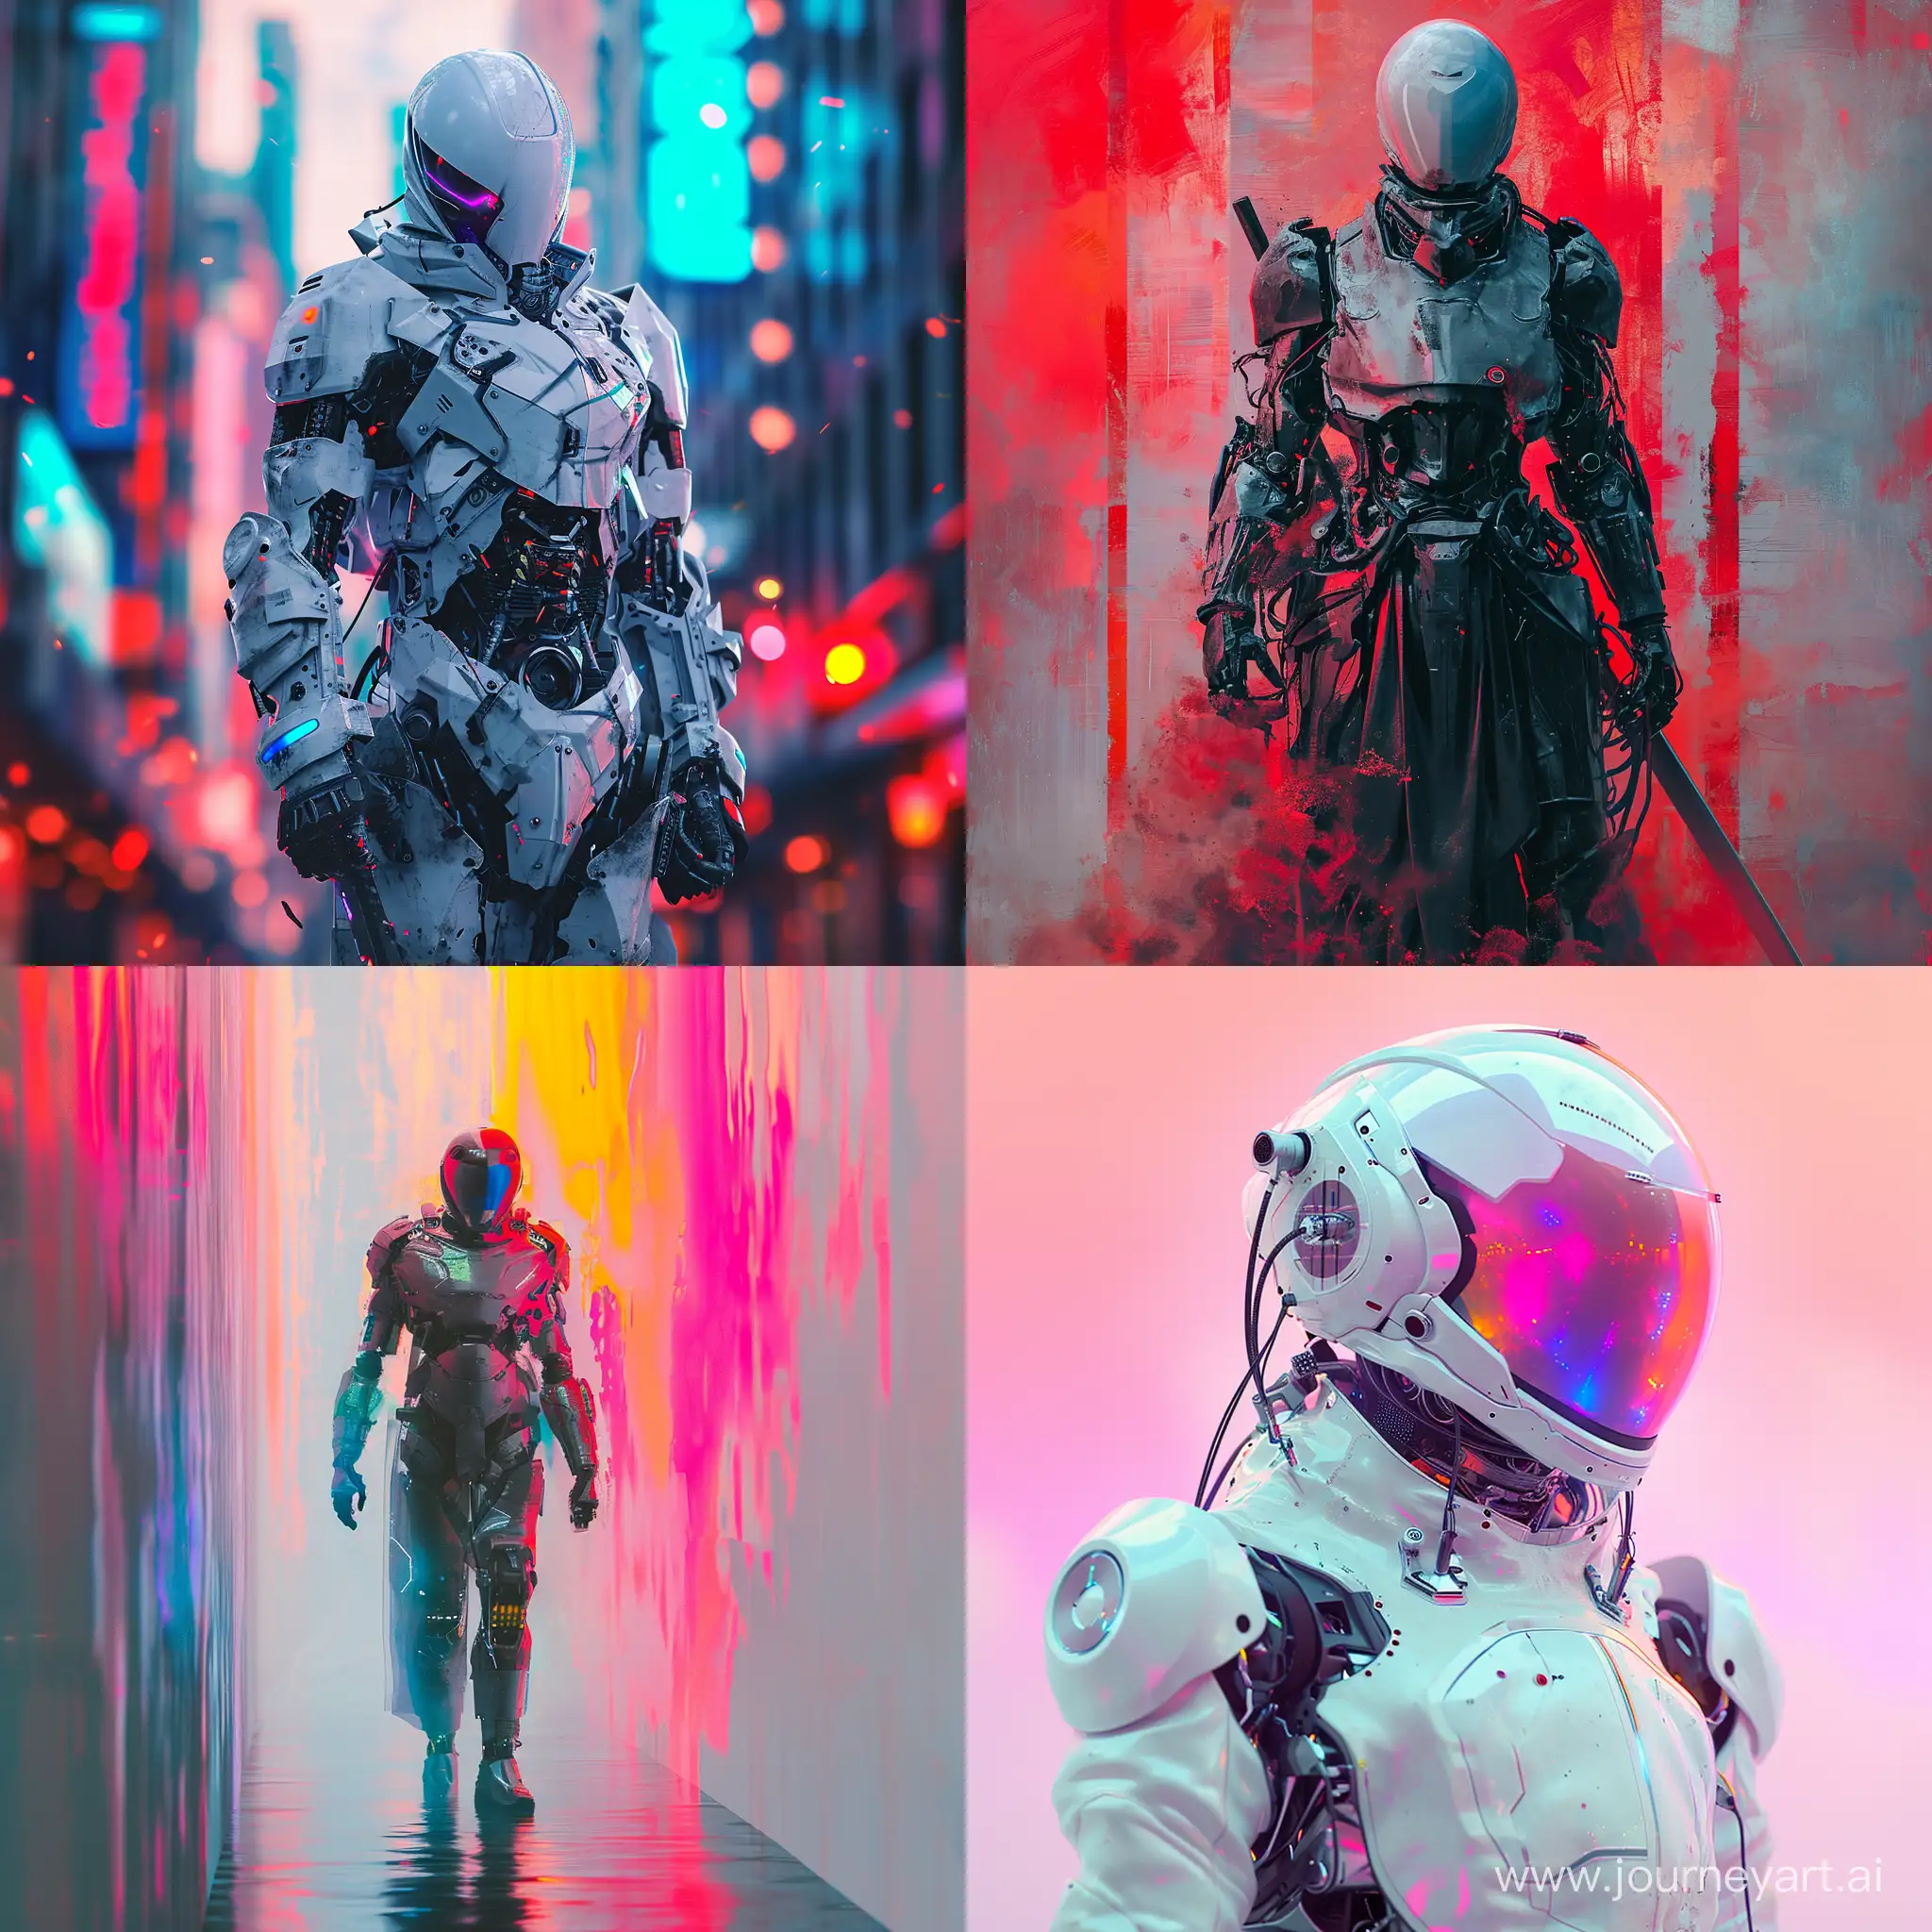 Cybernetic-White-Knight-in-Vibrant-Cyberpunk-Style